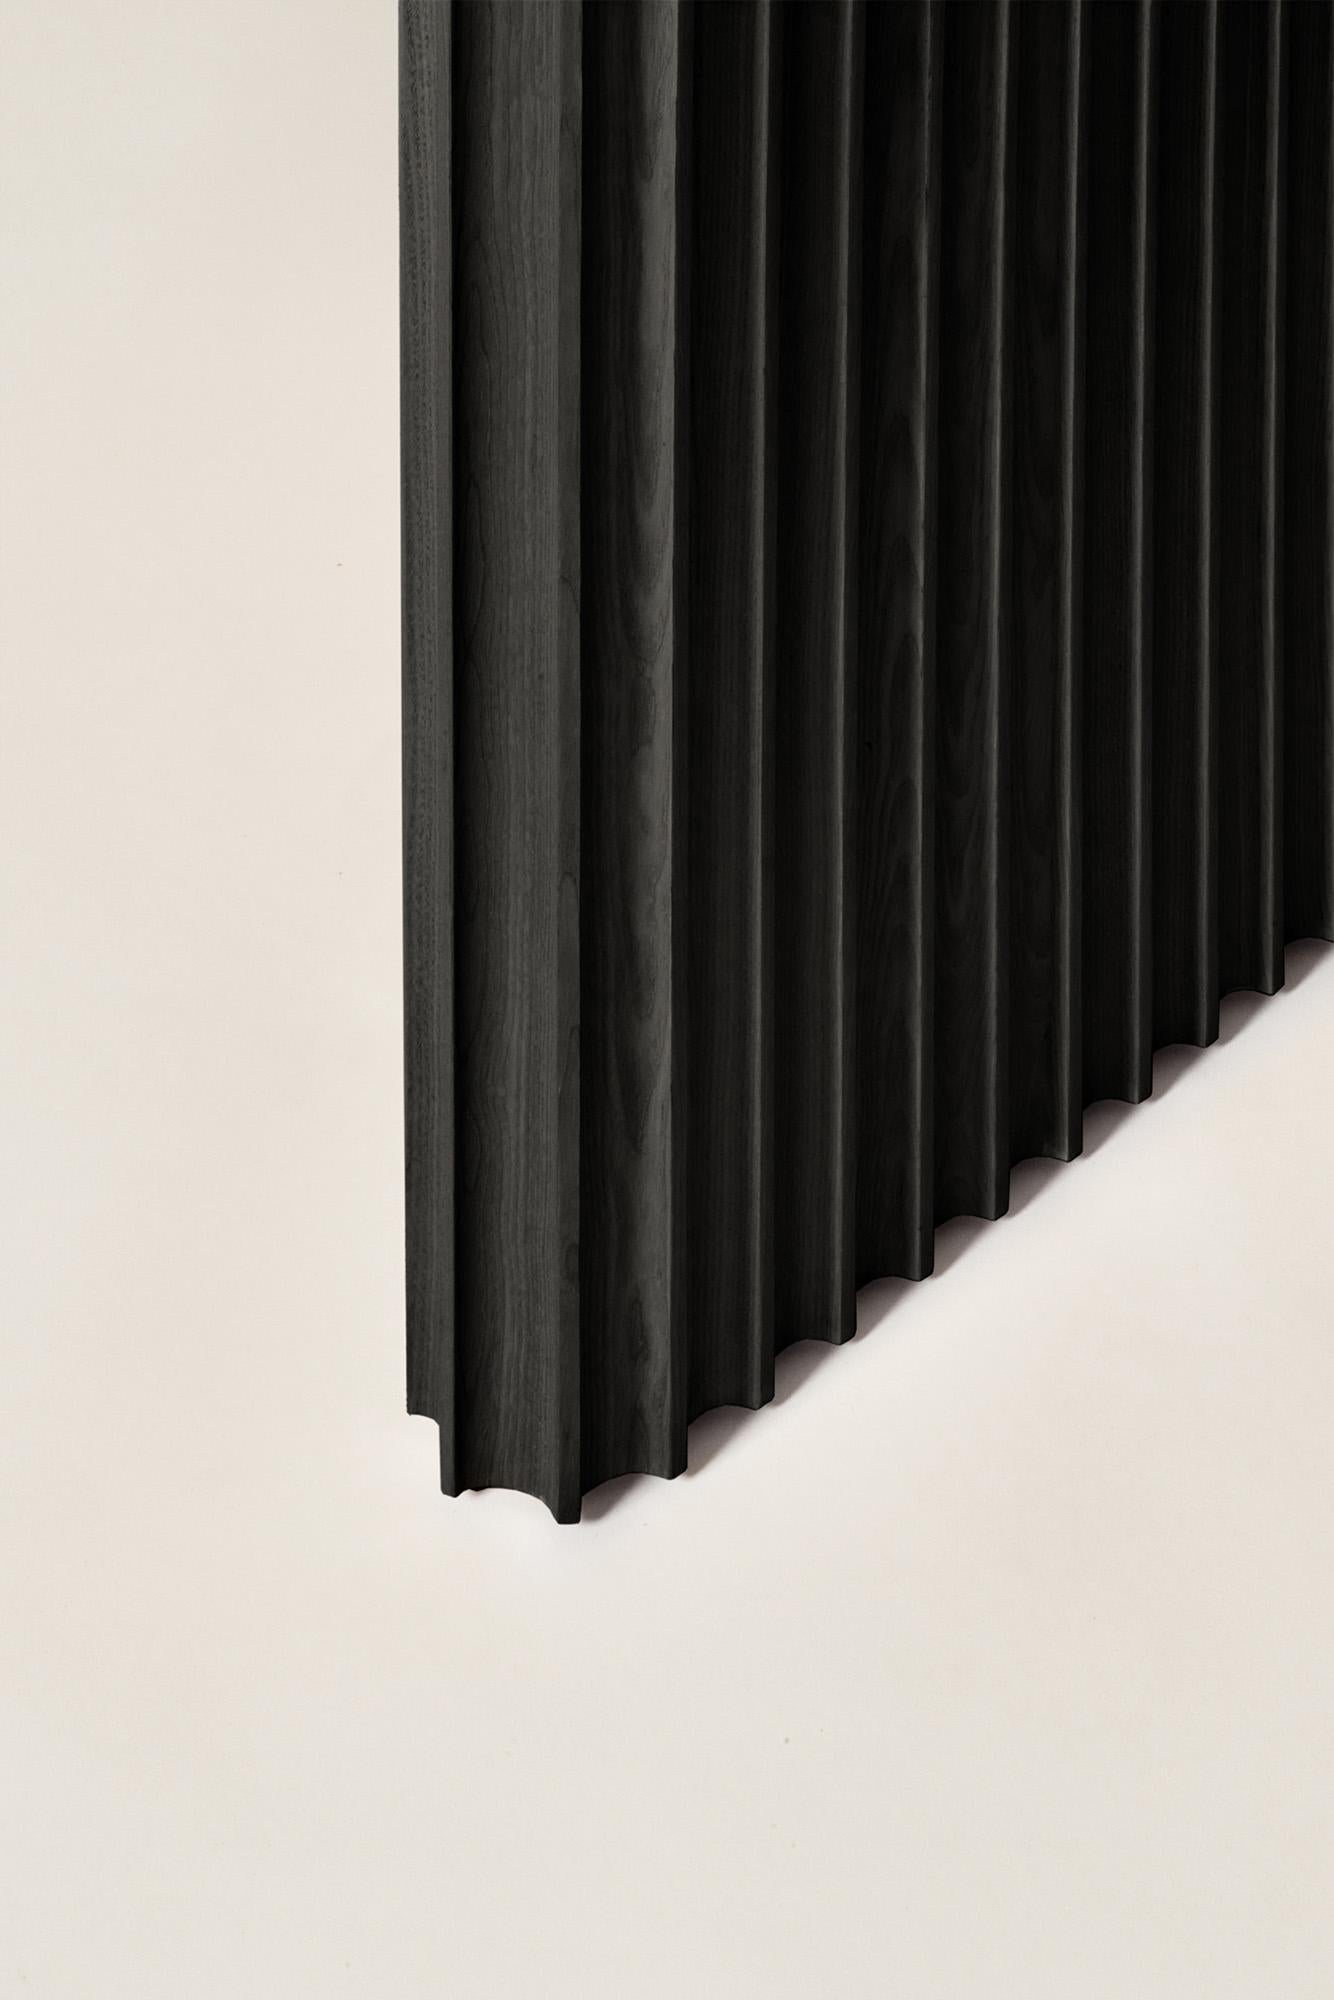 Basalto Solid Wood Table, Ash in Handmade Black Finish, Contemporary In New Condition For Sale In Cadeglioppi de Oppeano, VR